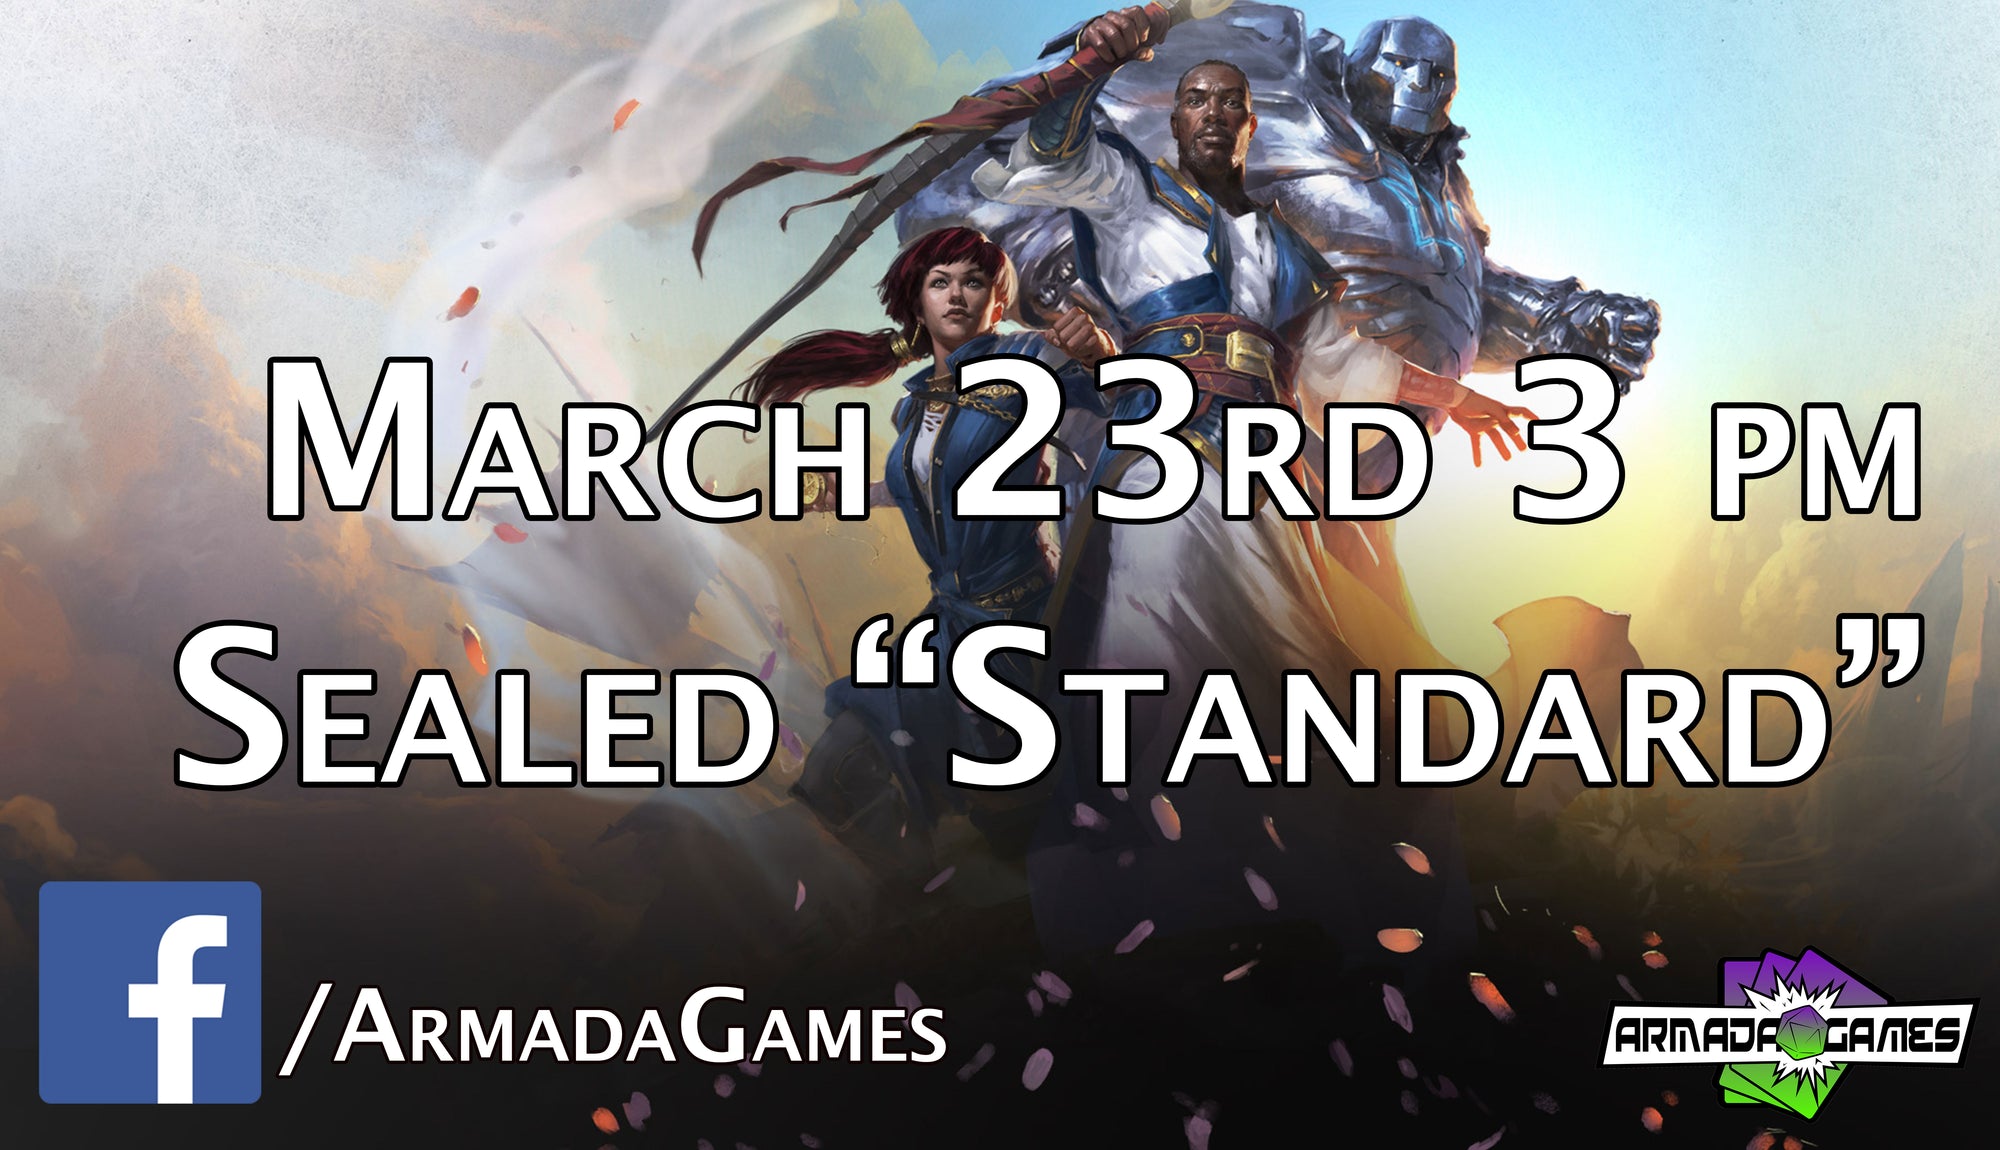 Magic: Sealed "Standard" Event